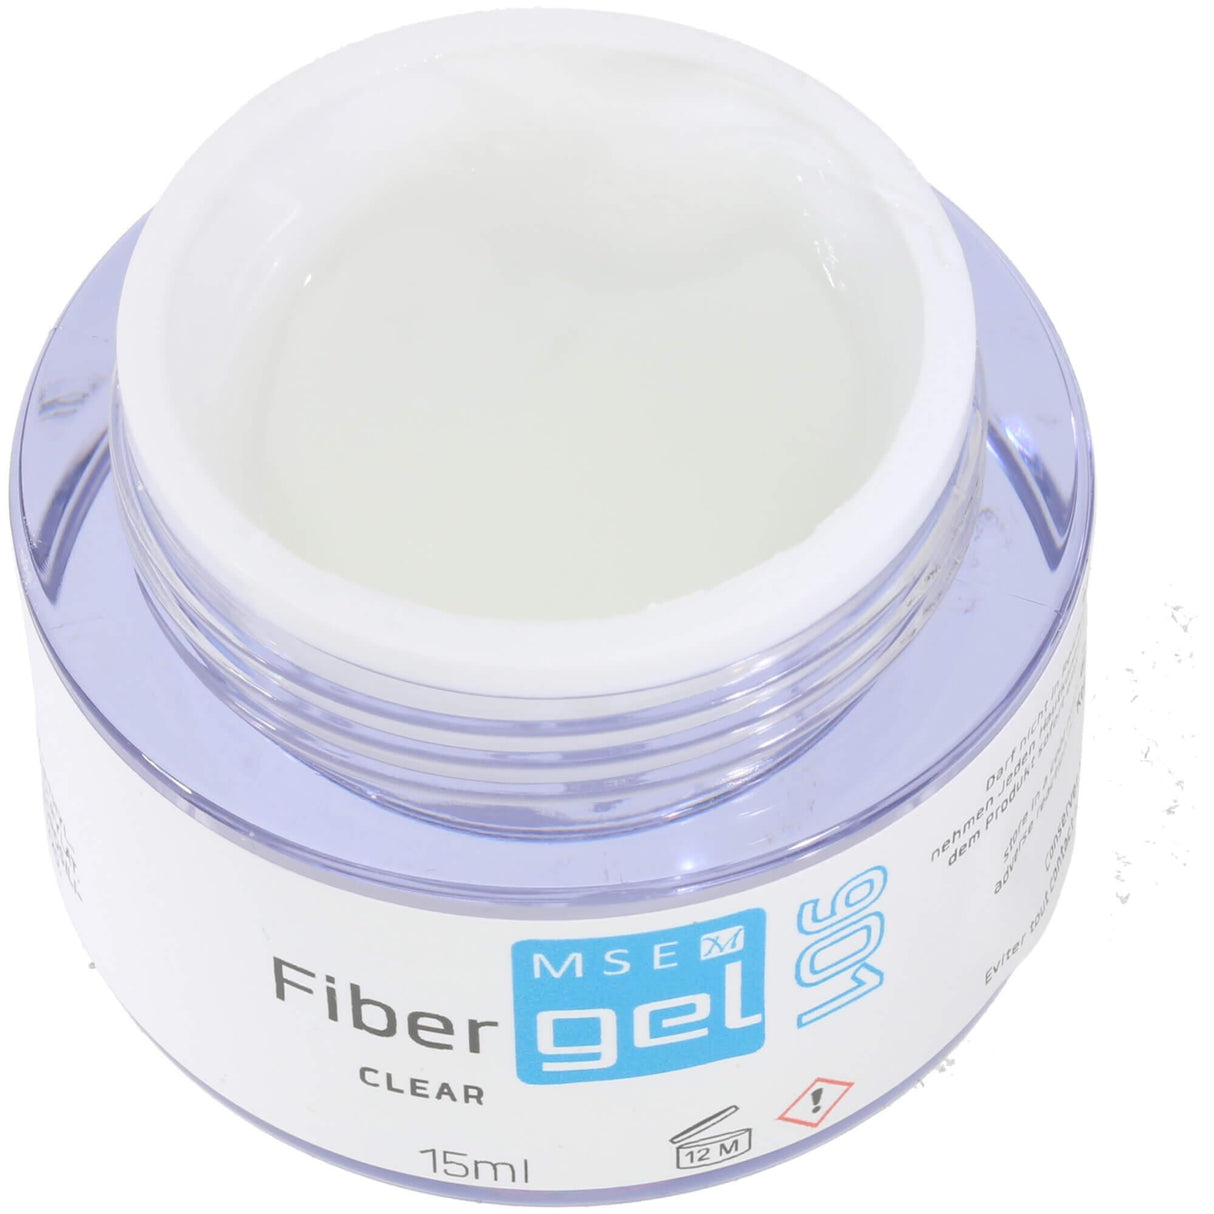 MSE Gel 901: Building Fiber Gel clear 15ml - MSE - The Beauty Company